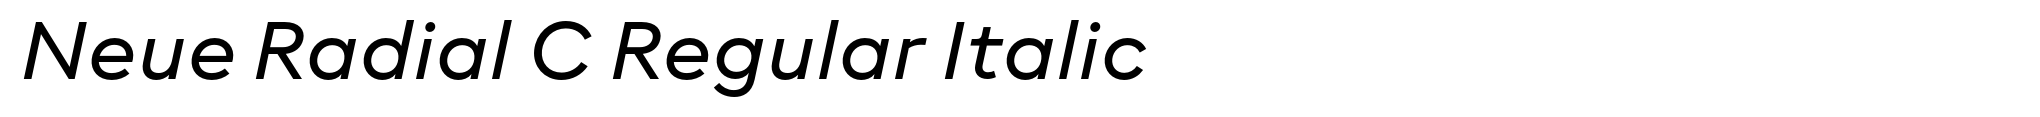 Neue Radial C Regular Italic image